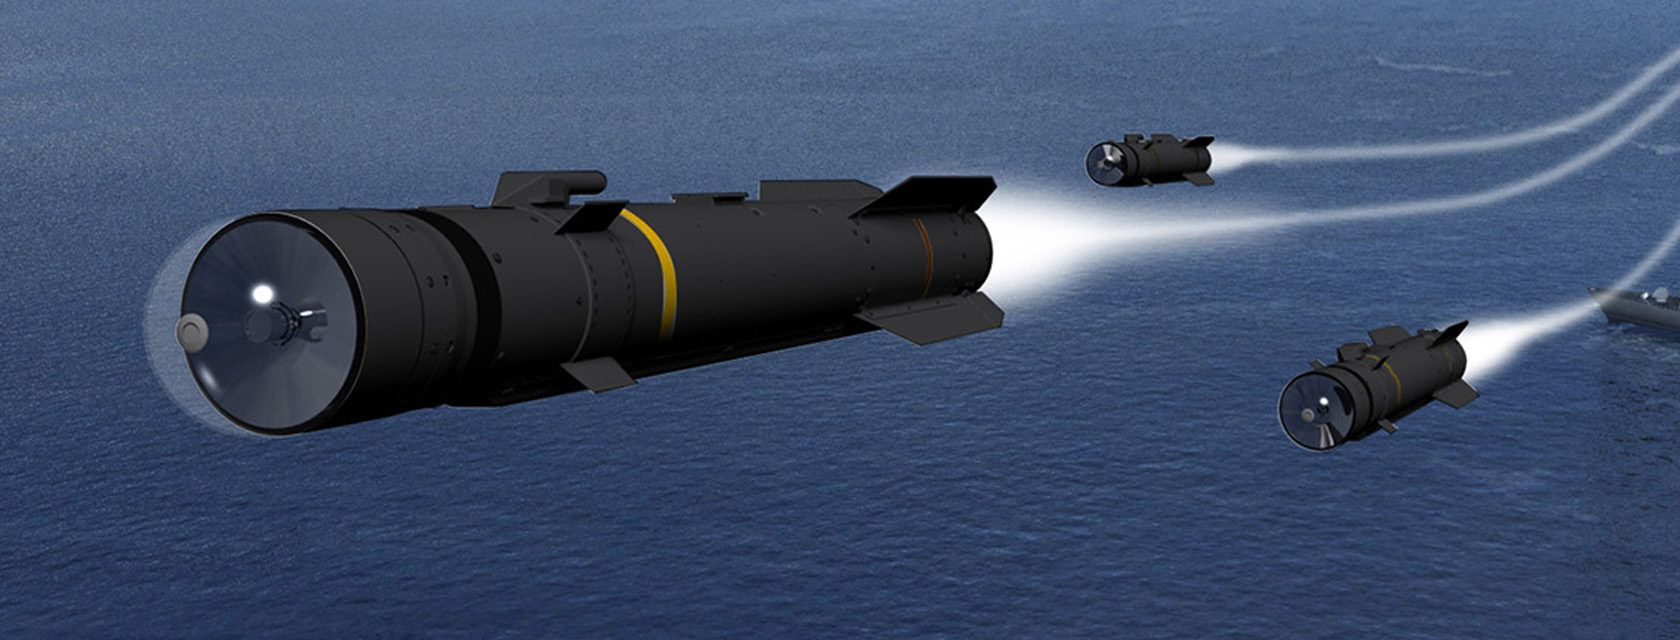 British Brimstone anti-ship missiles will arrive in Ukraine soon 